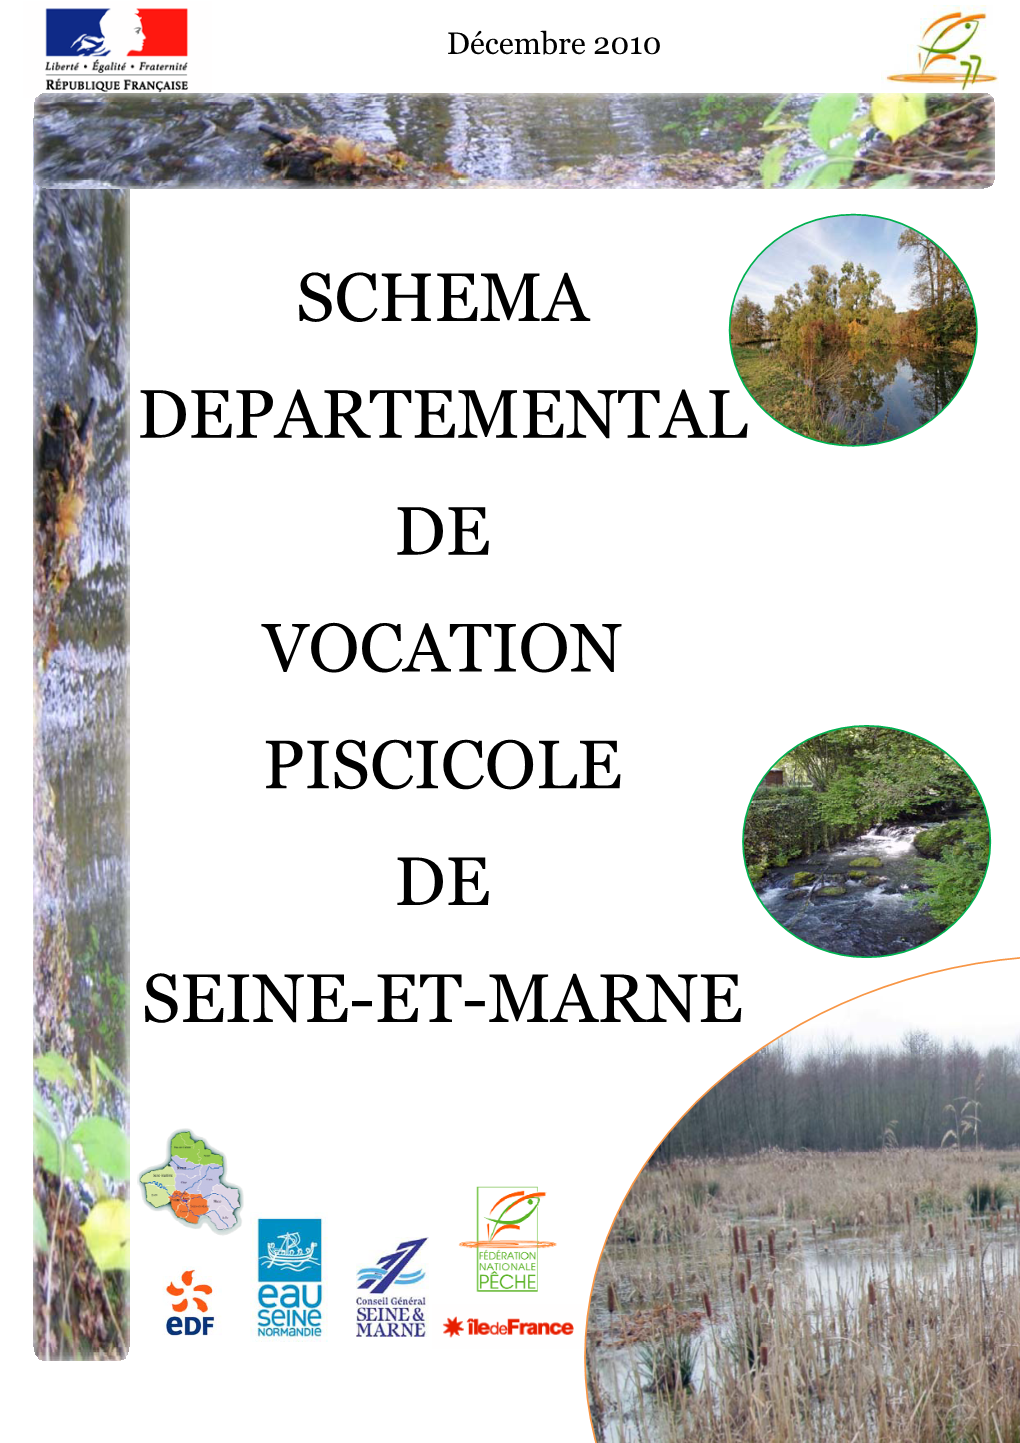 Schema Departemental De Vocation Piscicole De Seine-Et-Marne